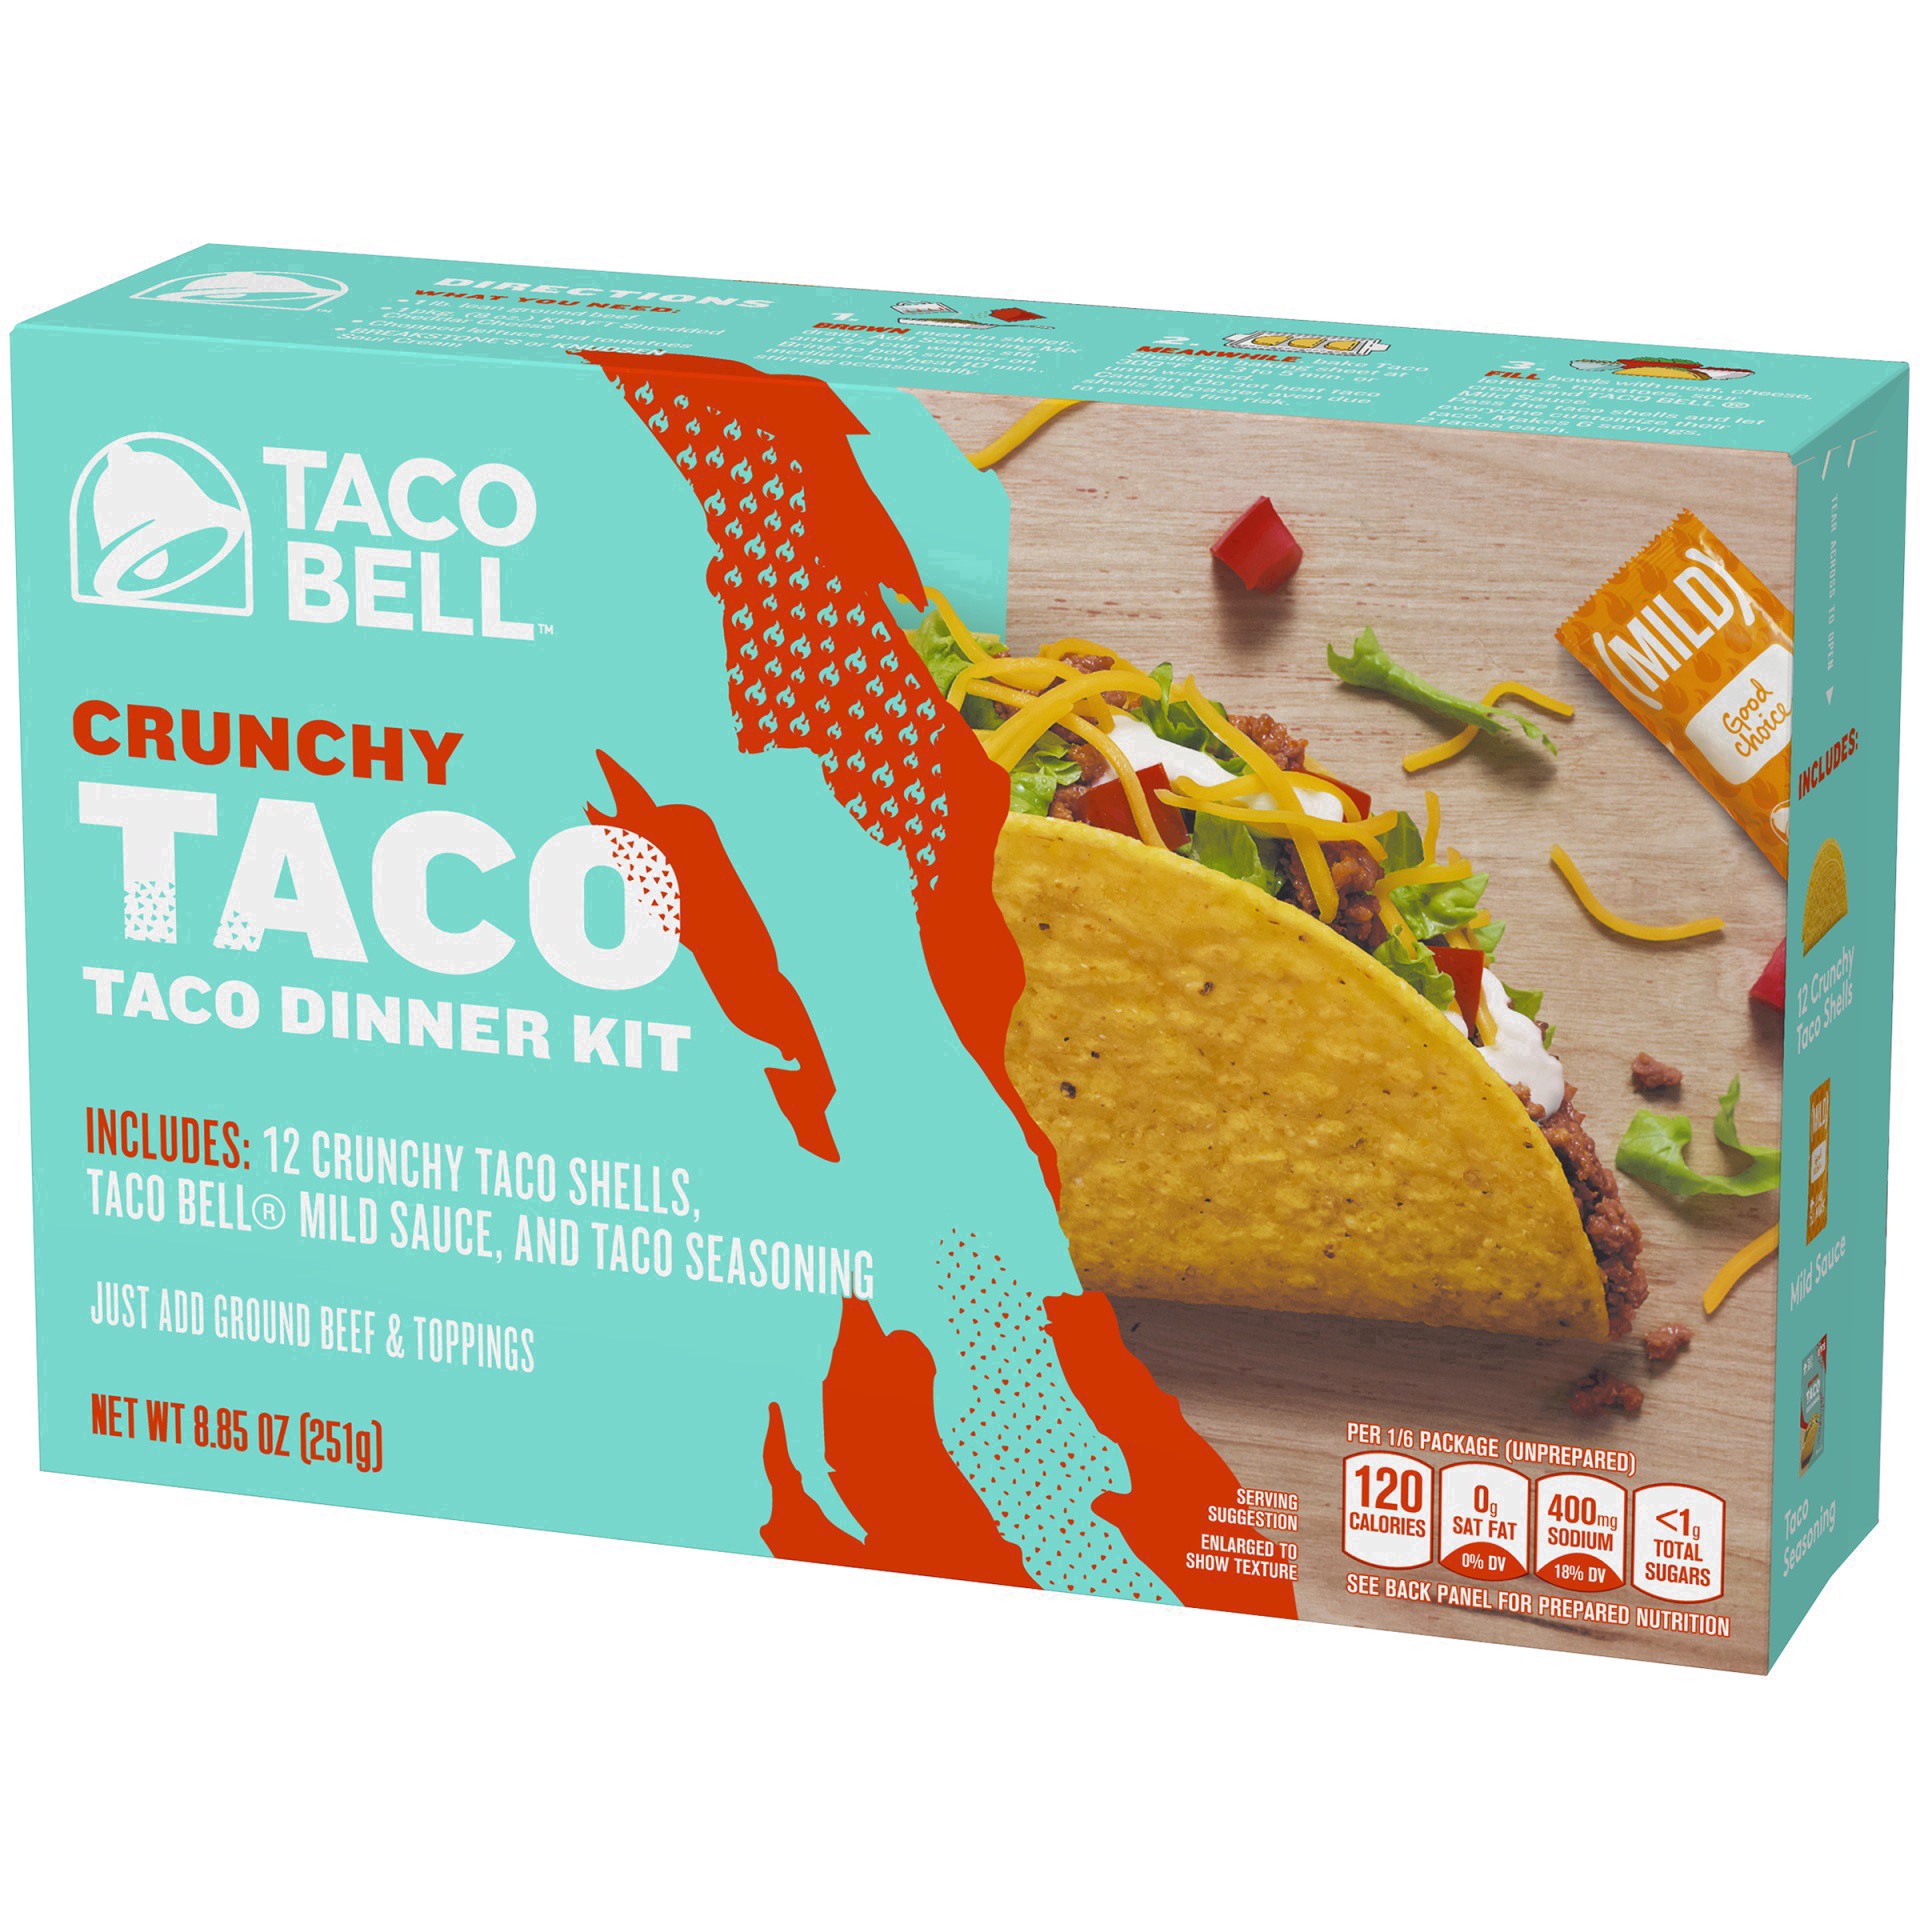 slide 8 of 91, Taco Bell Crunchy Taco Cravings Kit with 12 Crunchy Taco Shells, Taco Bell Mild Sauce & Seasoning, 8.85 oz Box, 1 ct